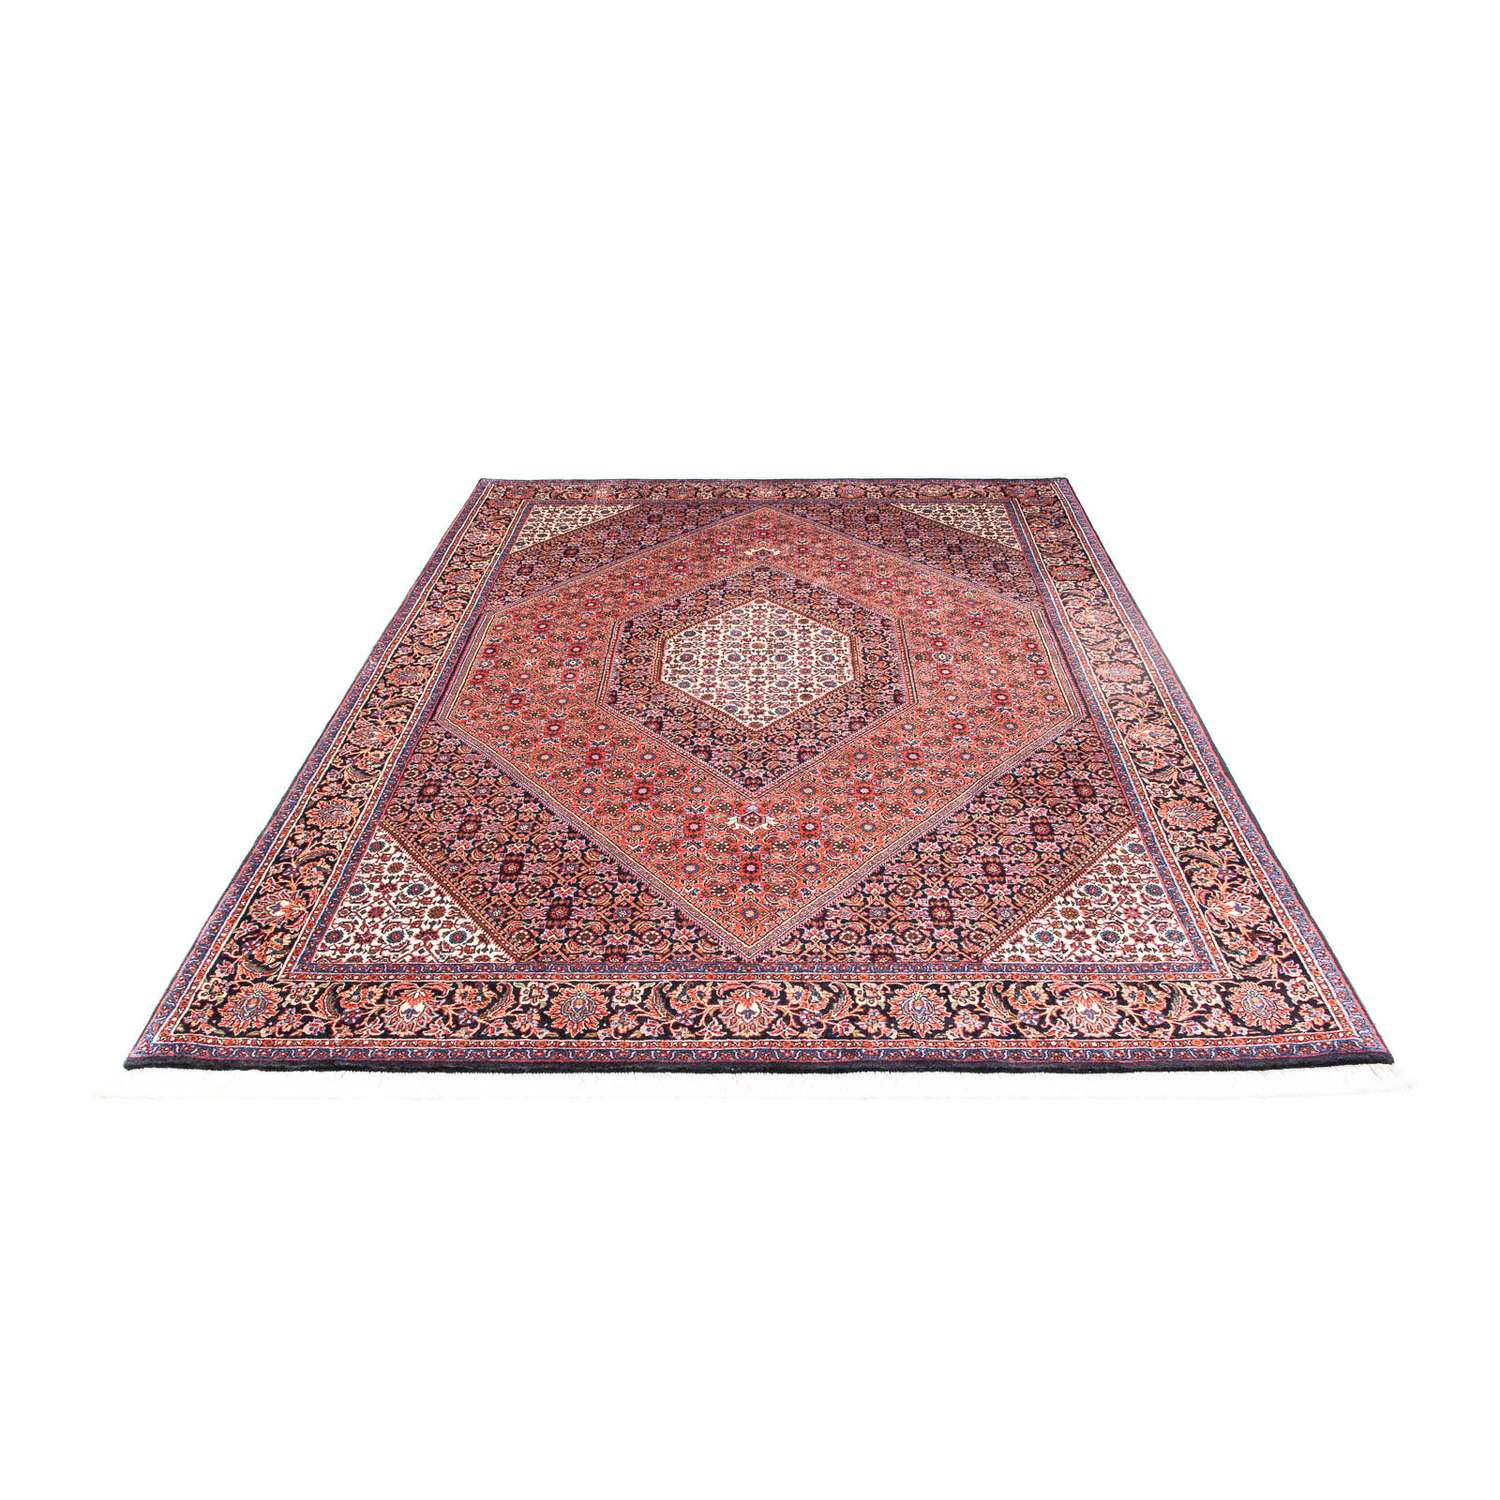 Perzisch tapijt - Bijar - 230 x 168 cm - licht rood